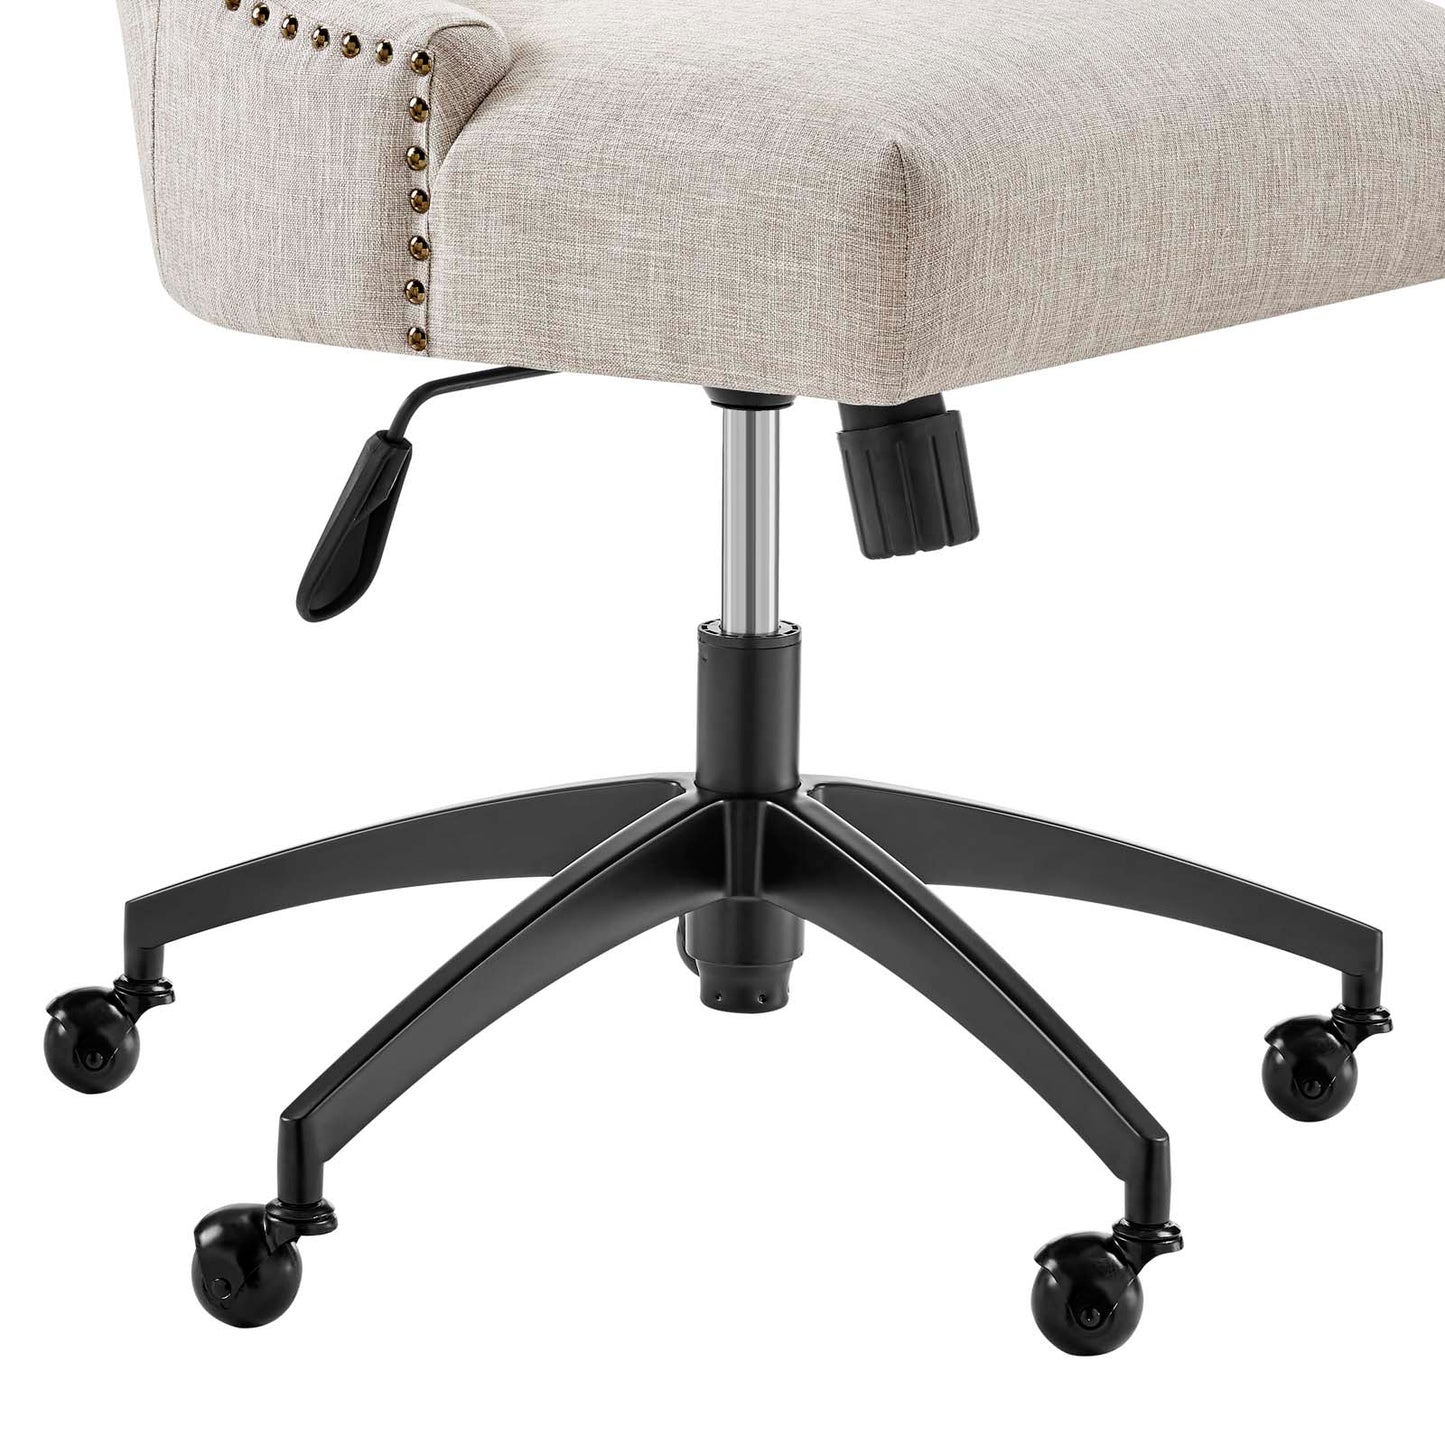 Empower Channel Tufted Fabric Office Chair Black Beige EEI-4576-BLK-BEI